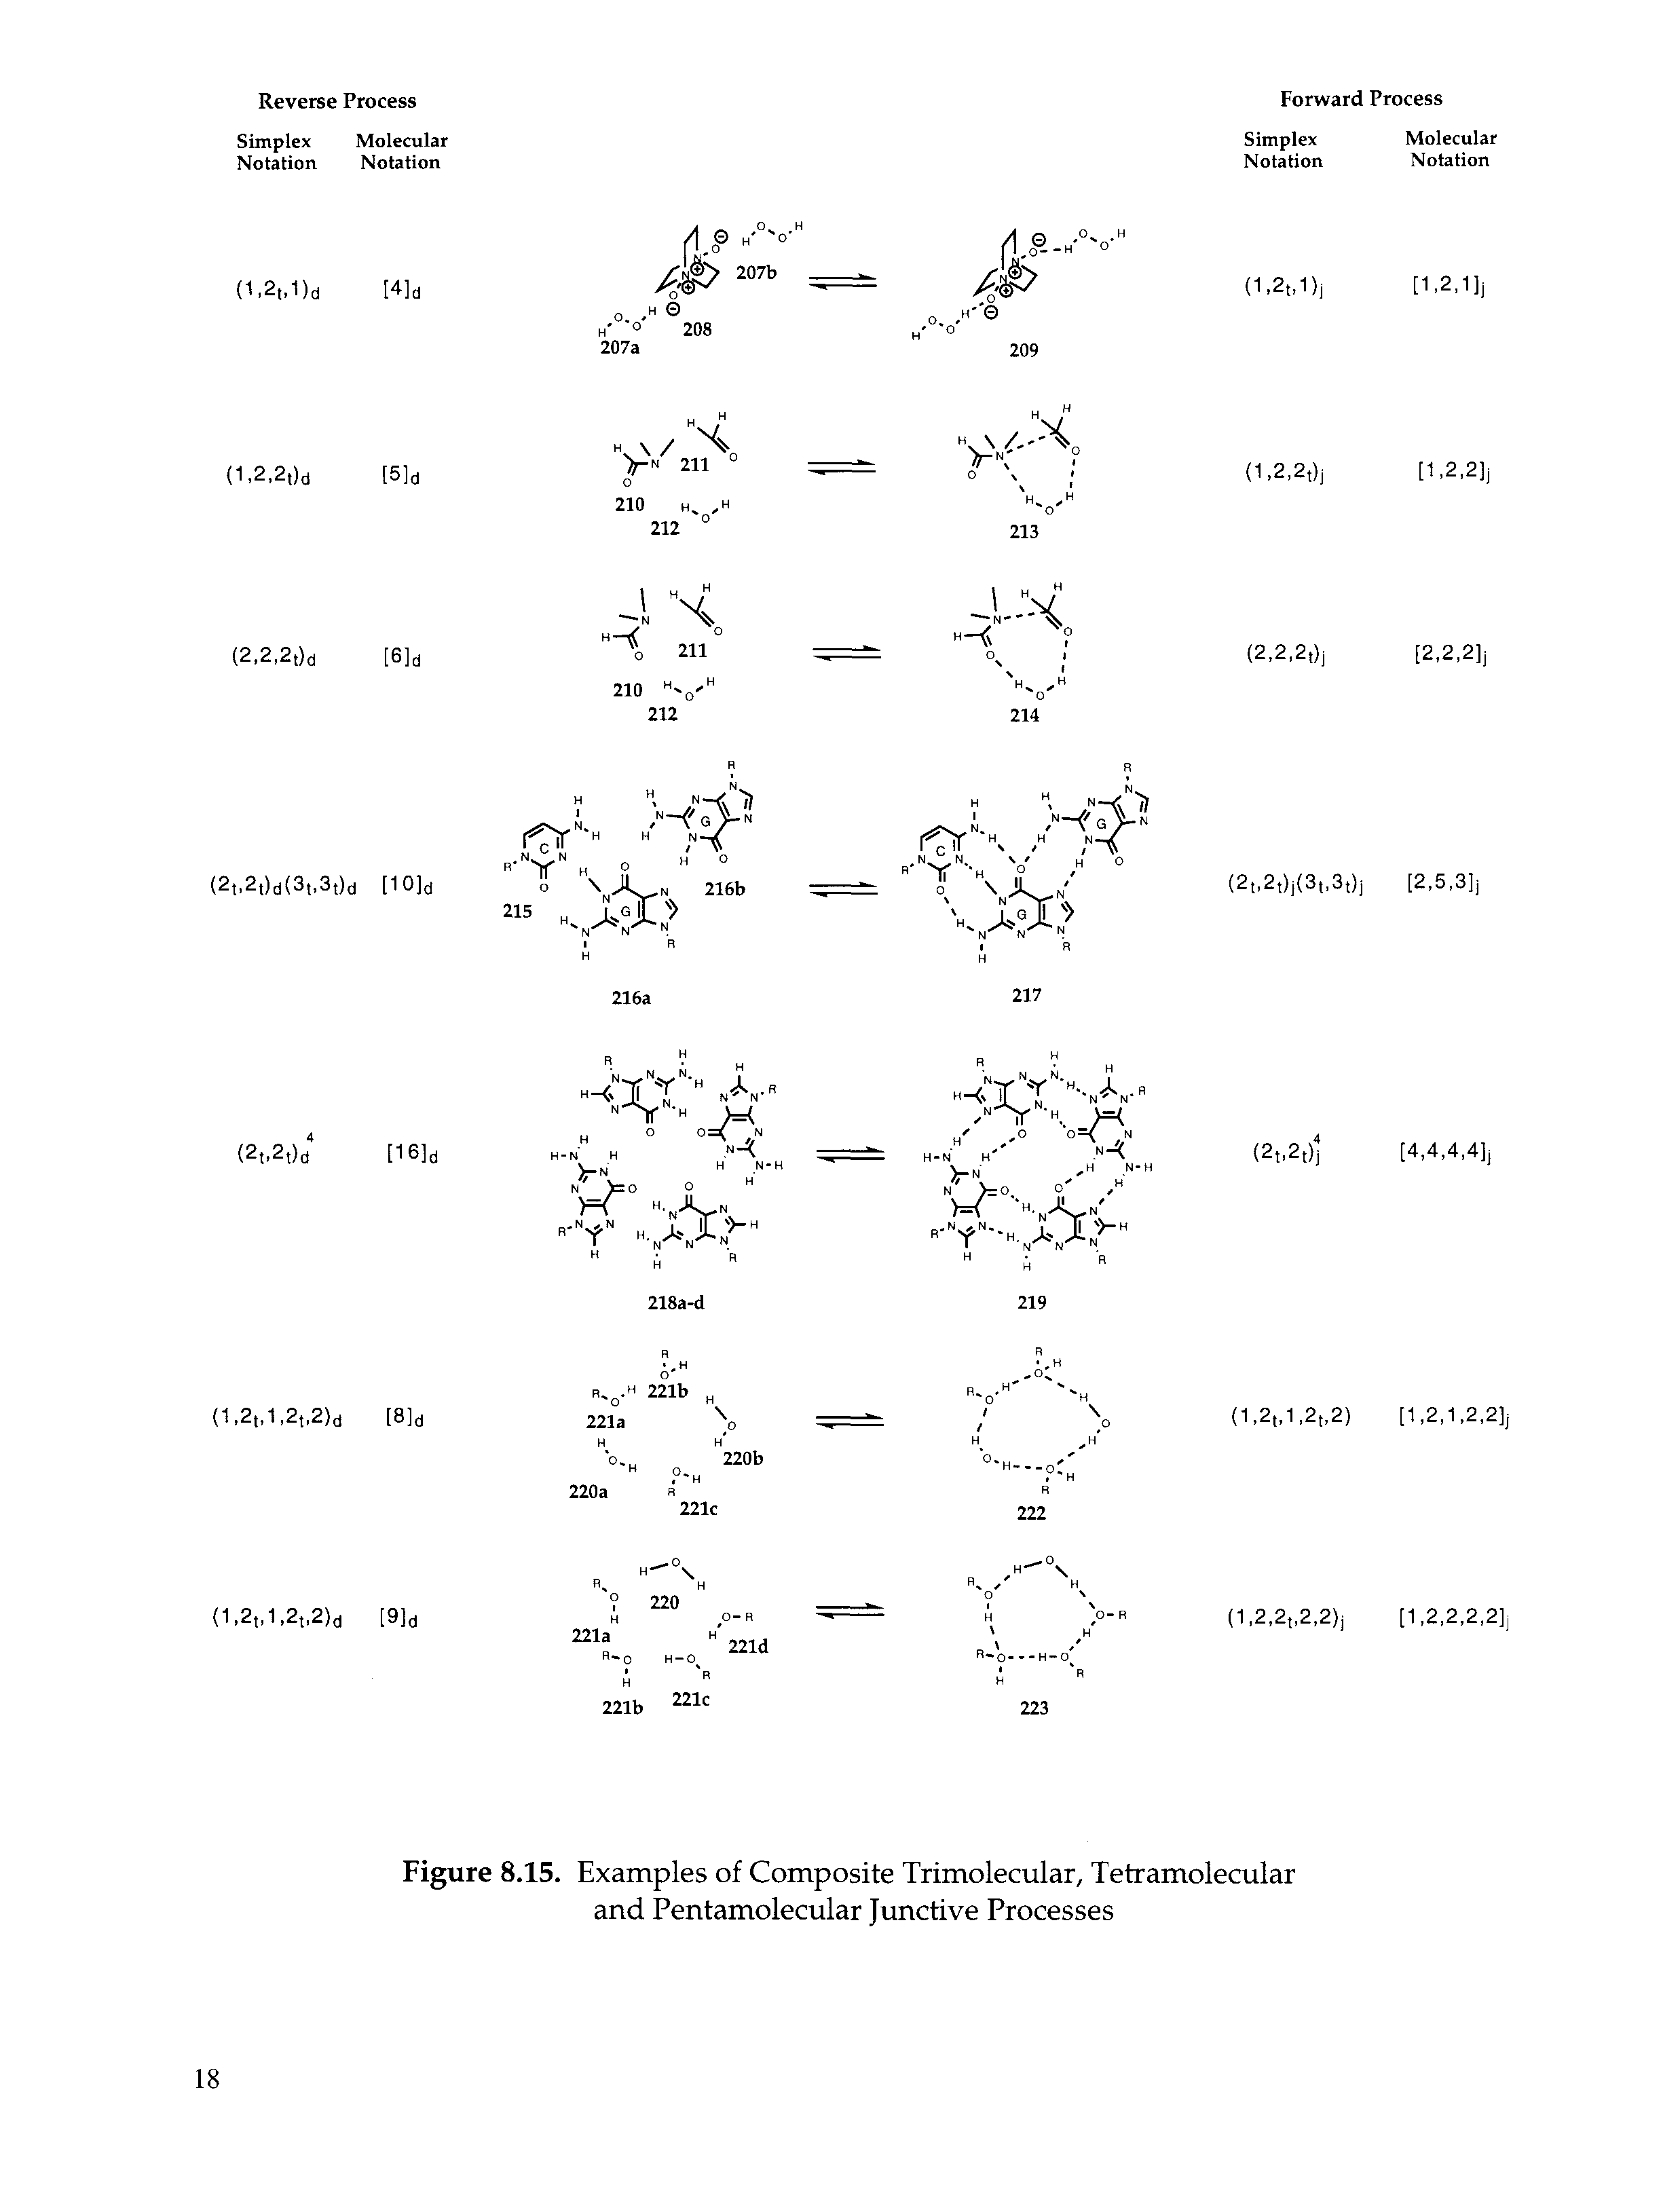 Figure 8.15. Examples of Composite Trimolecular, Tetramolecular and Pentamolecular Junctive Processes...